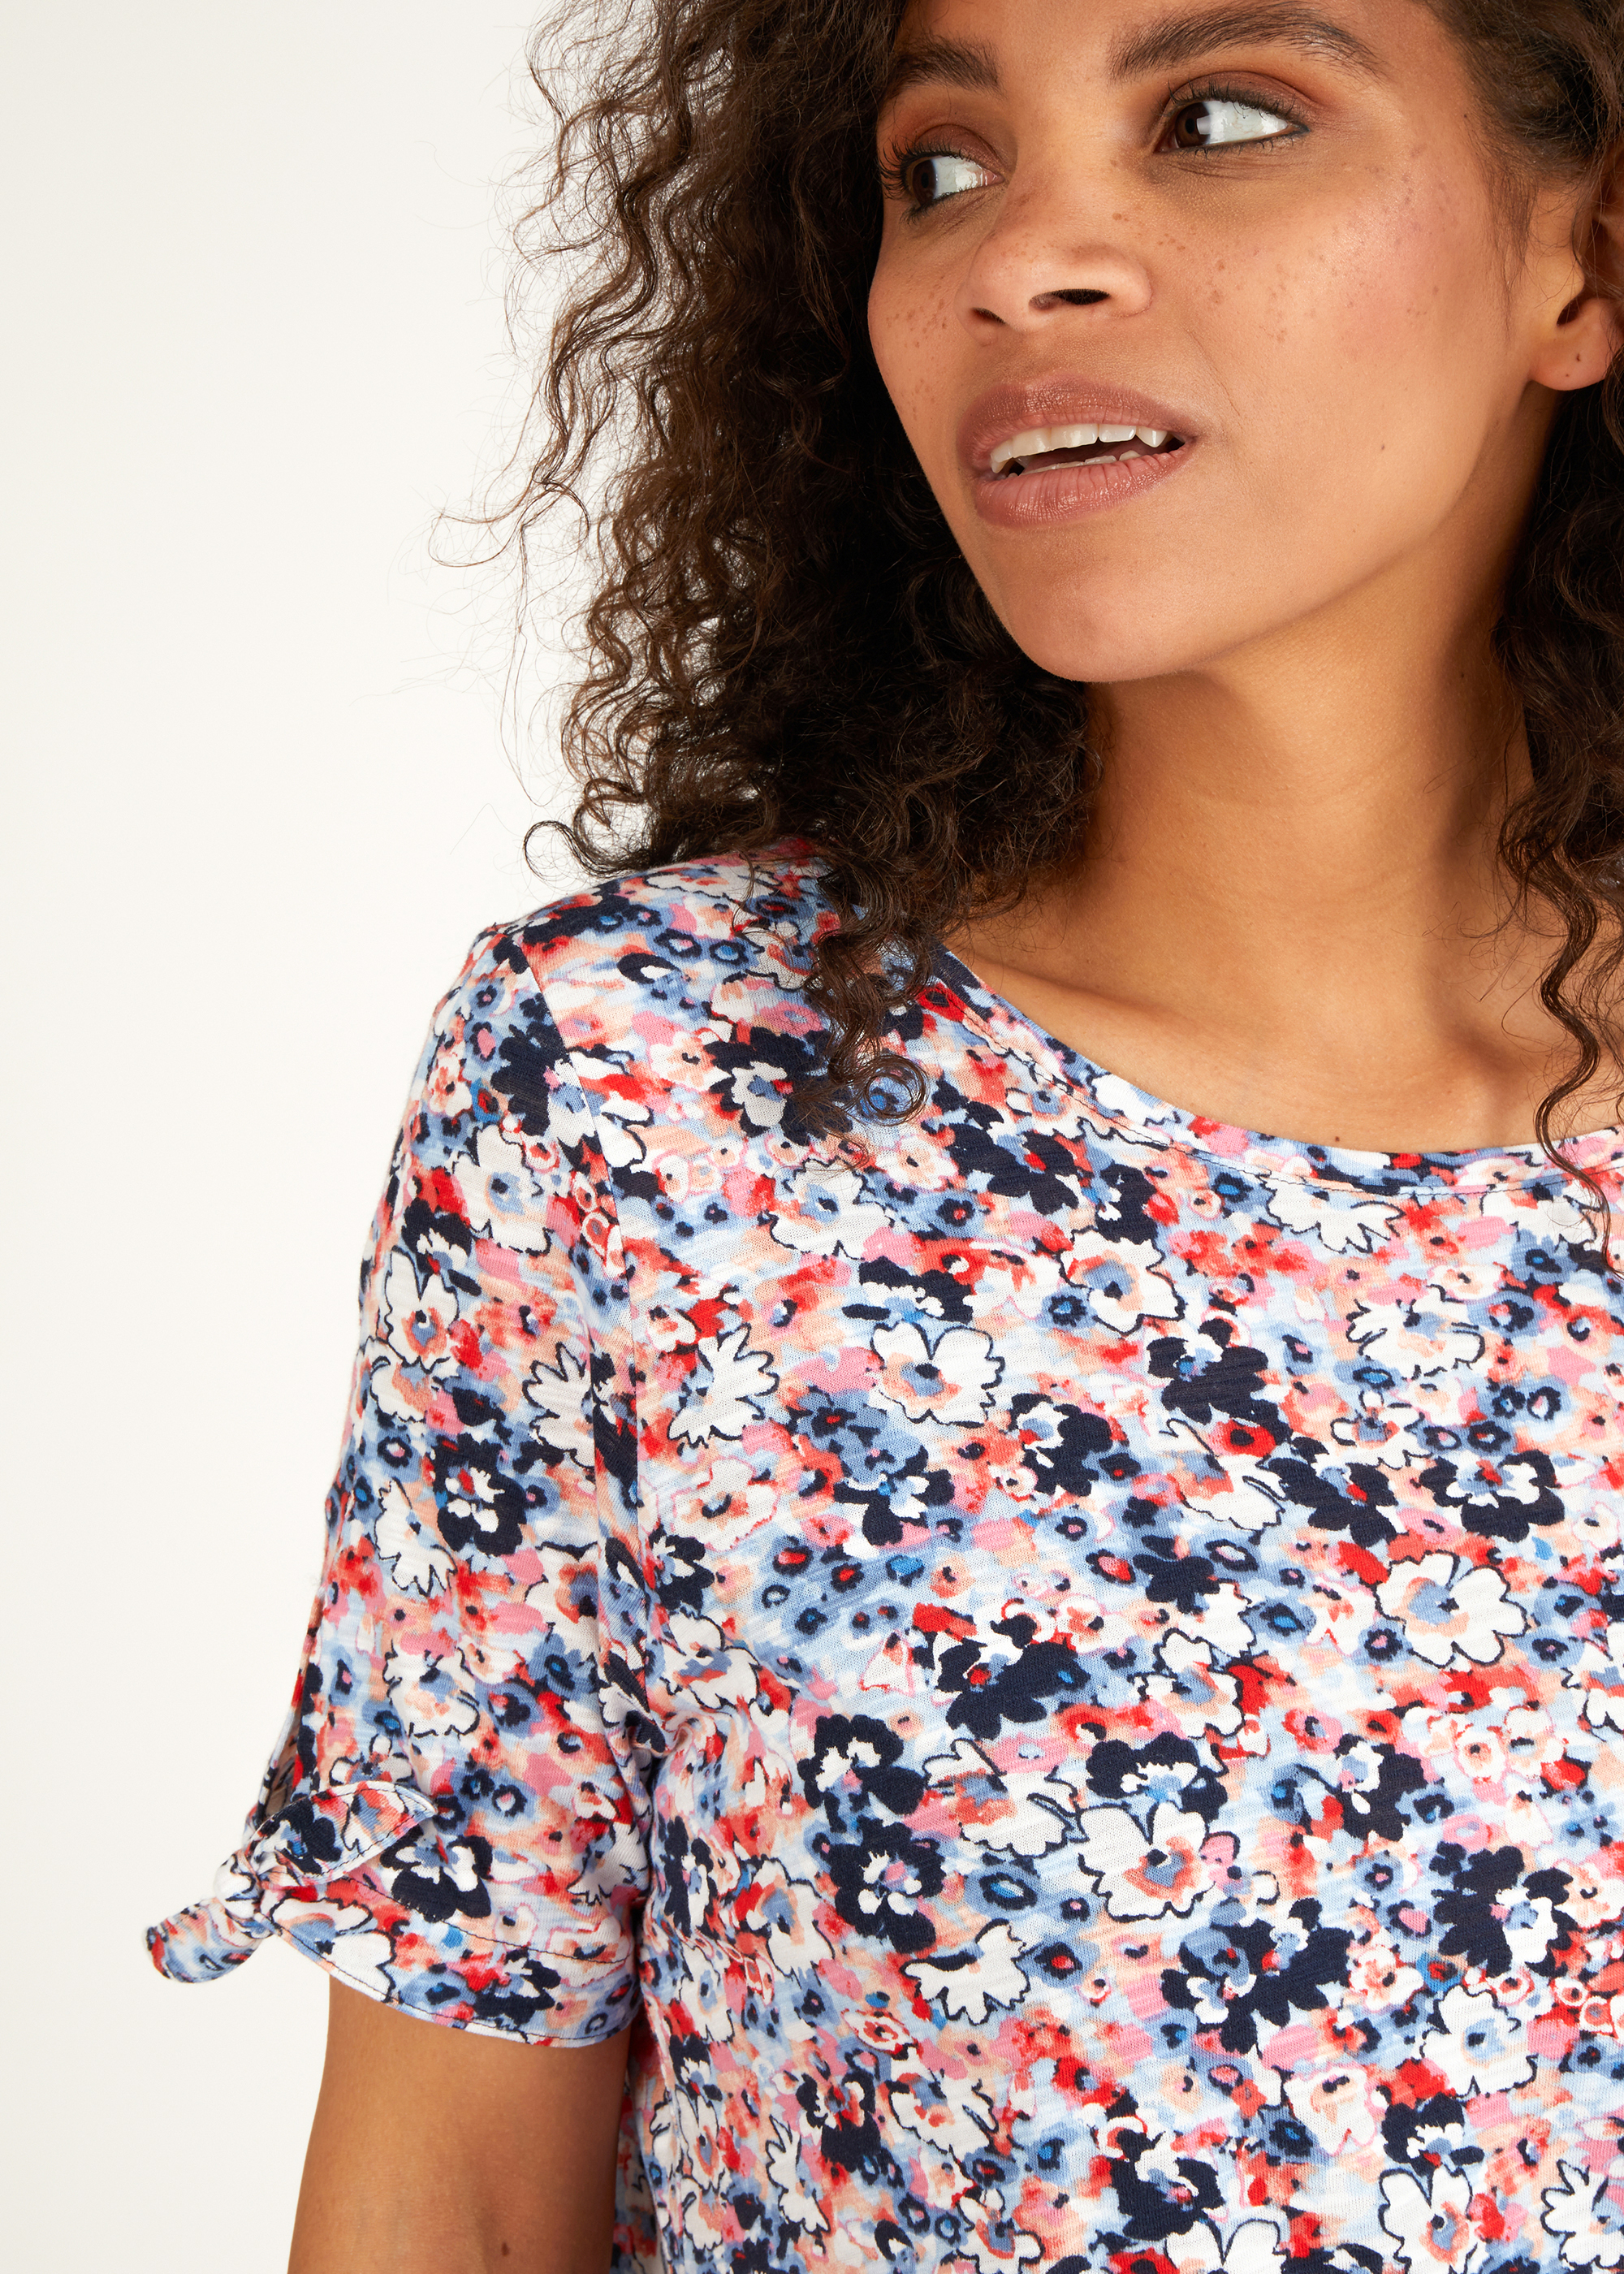 T-Shirt in Cotton-Viskose-Qualität mit floralem Print